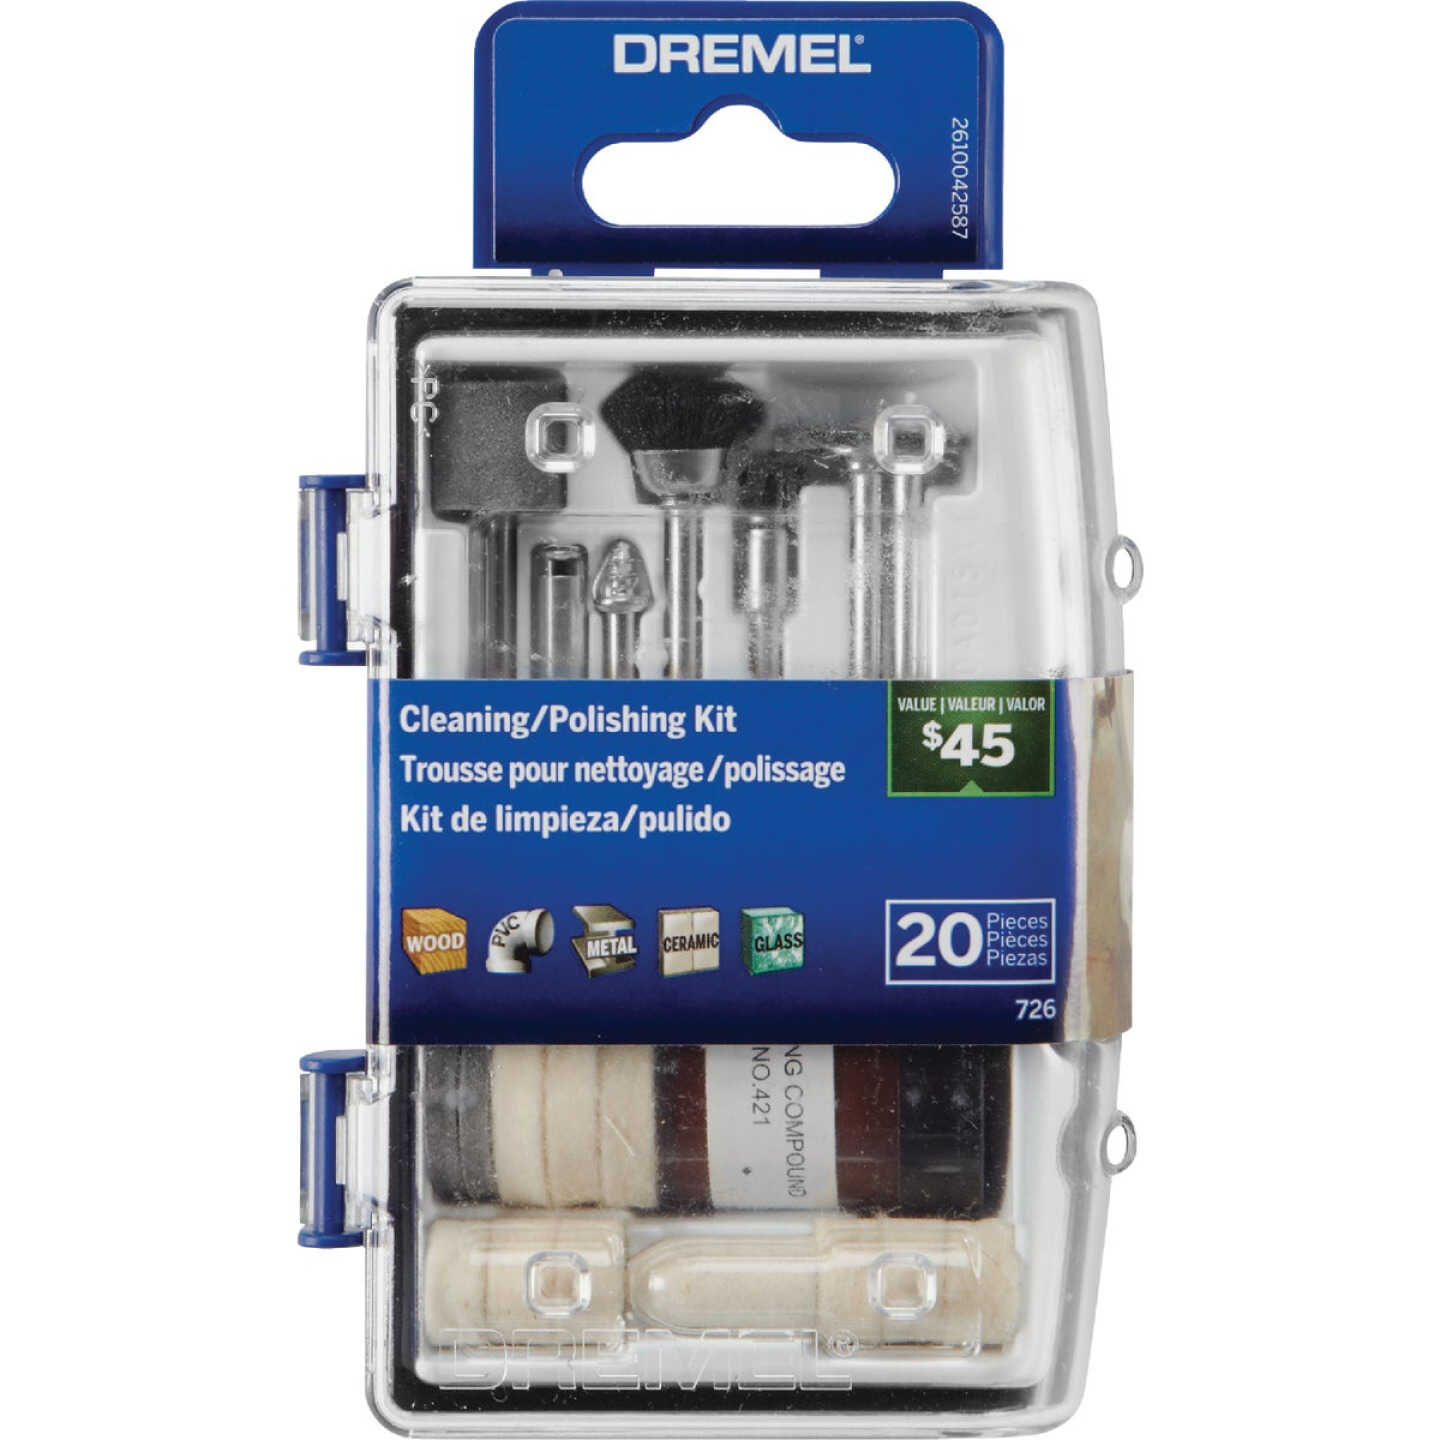 Dremel Cleaning/ Polishing Rotary Tool Accessory Kit (20-Piece